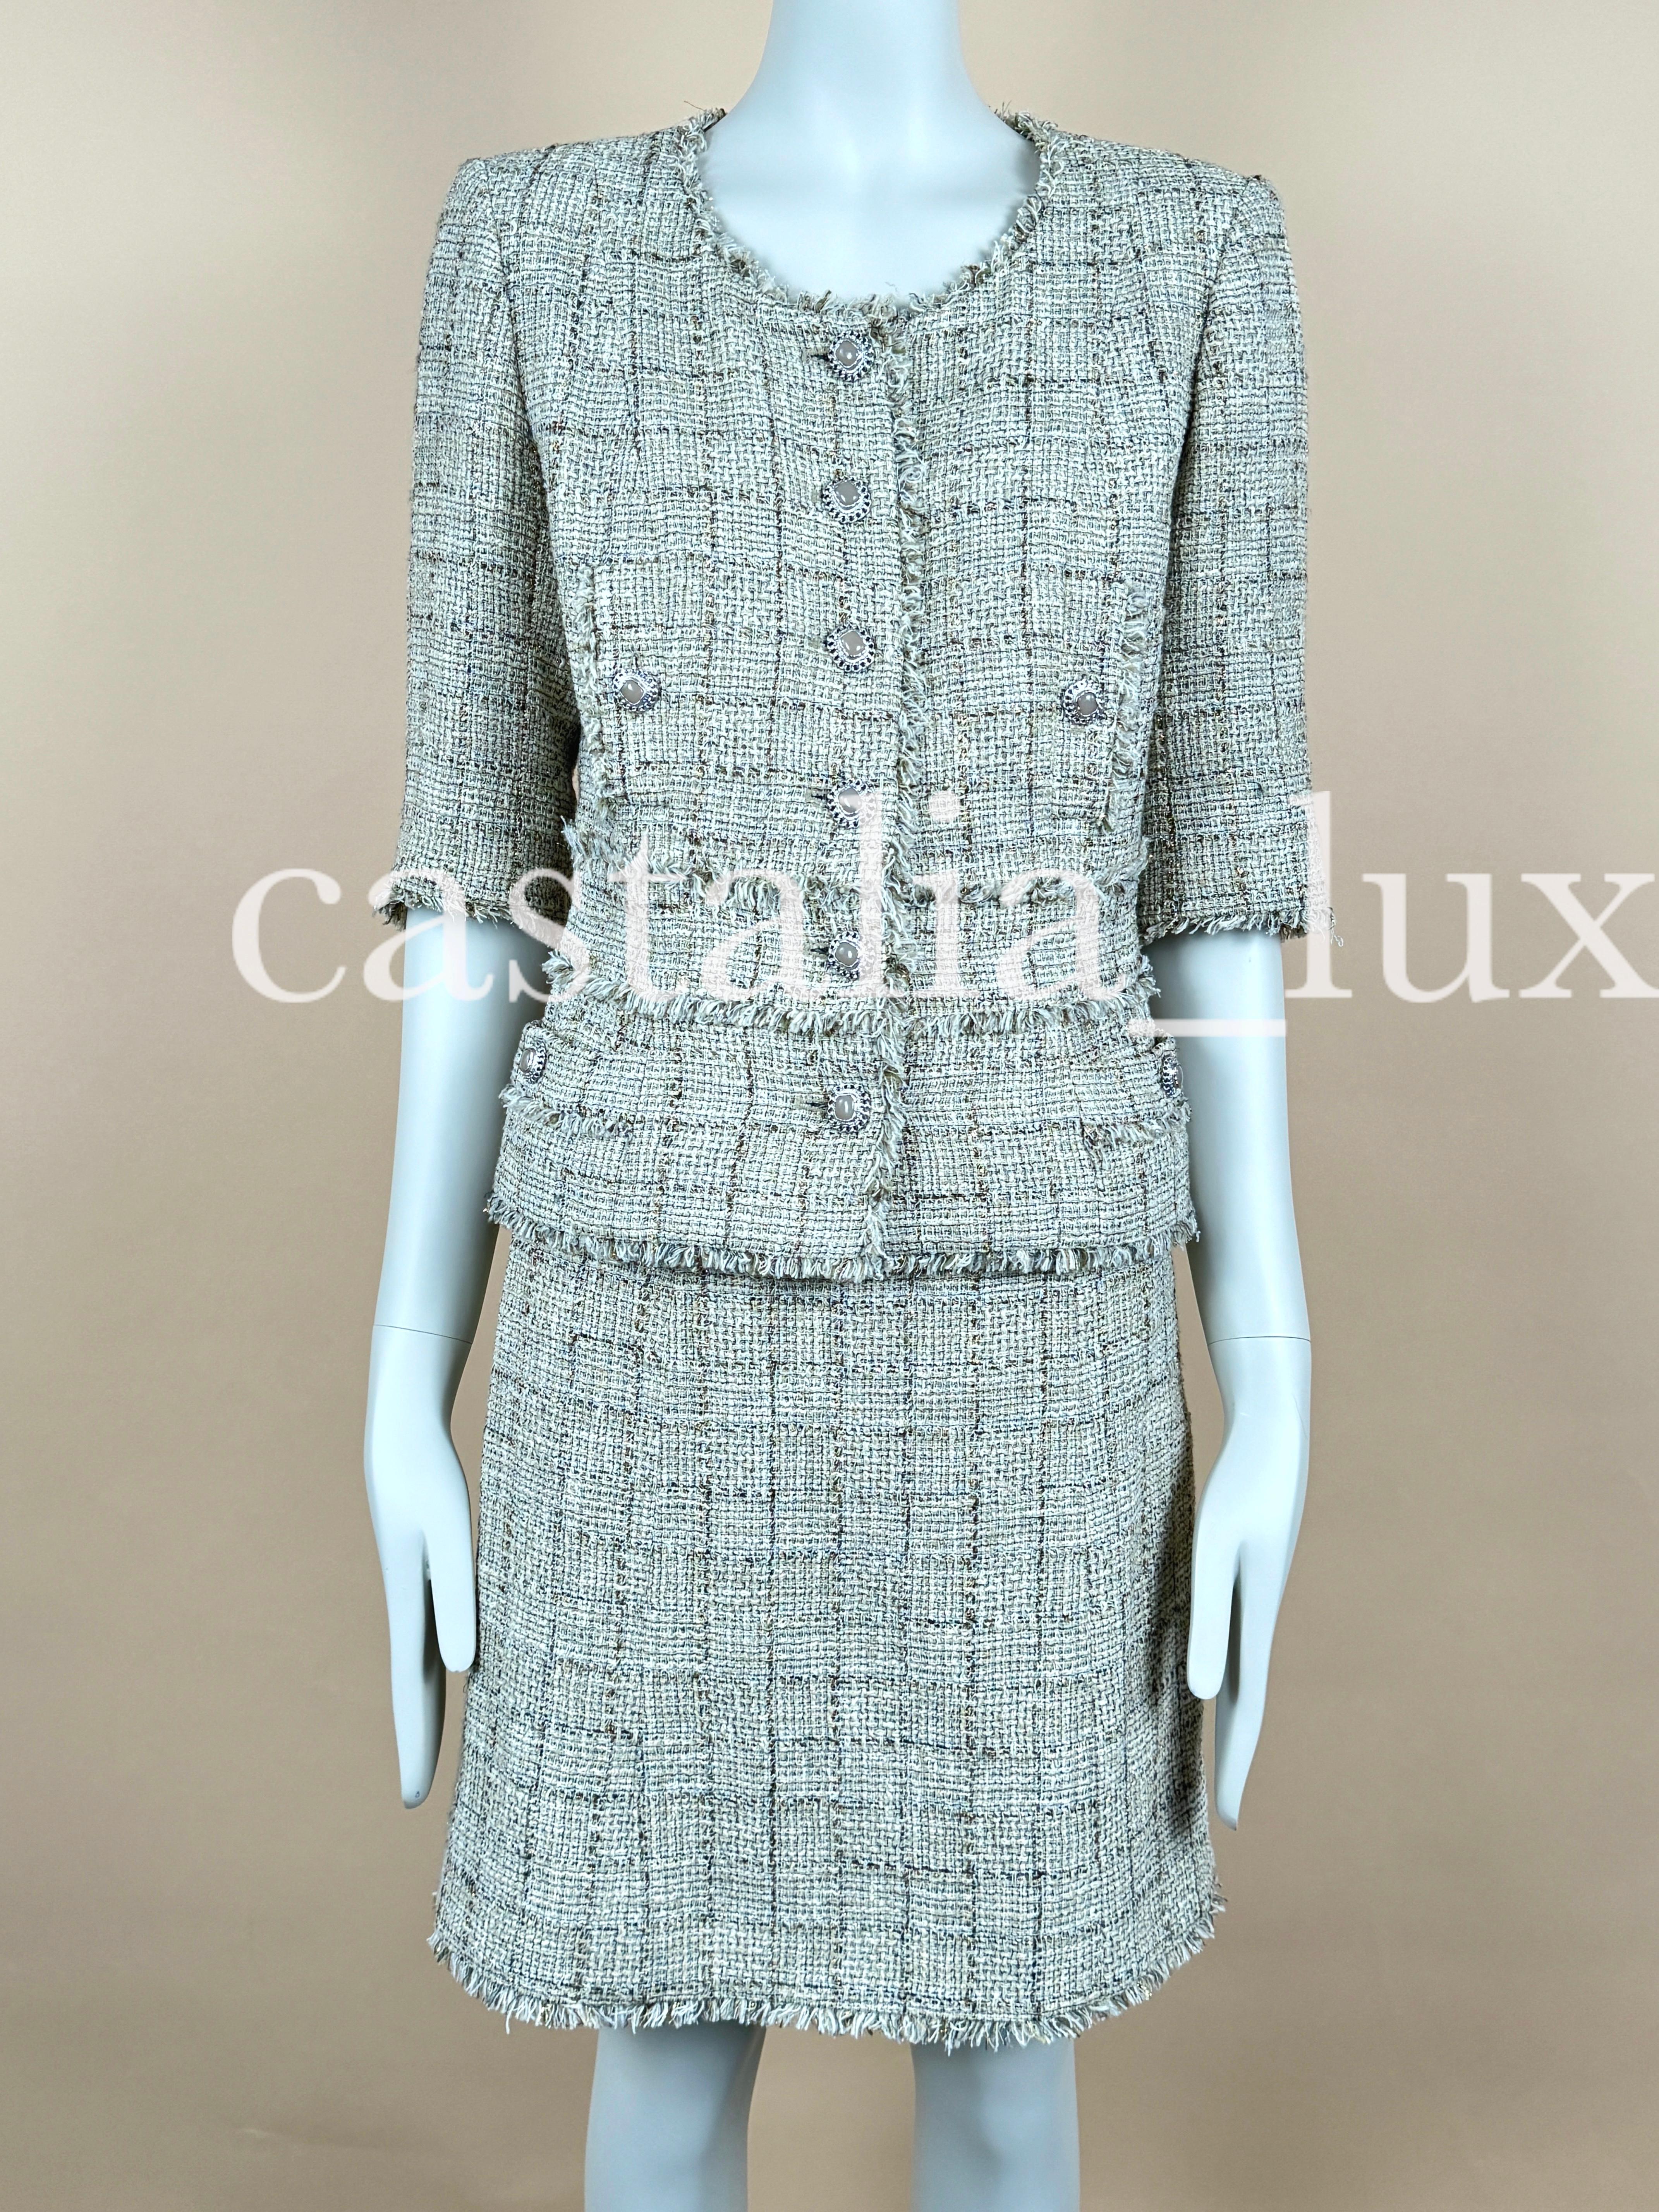 Chanel Gisele Bundchen Style Jewel Buttons Tweed Suit For Sale 3